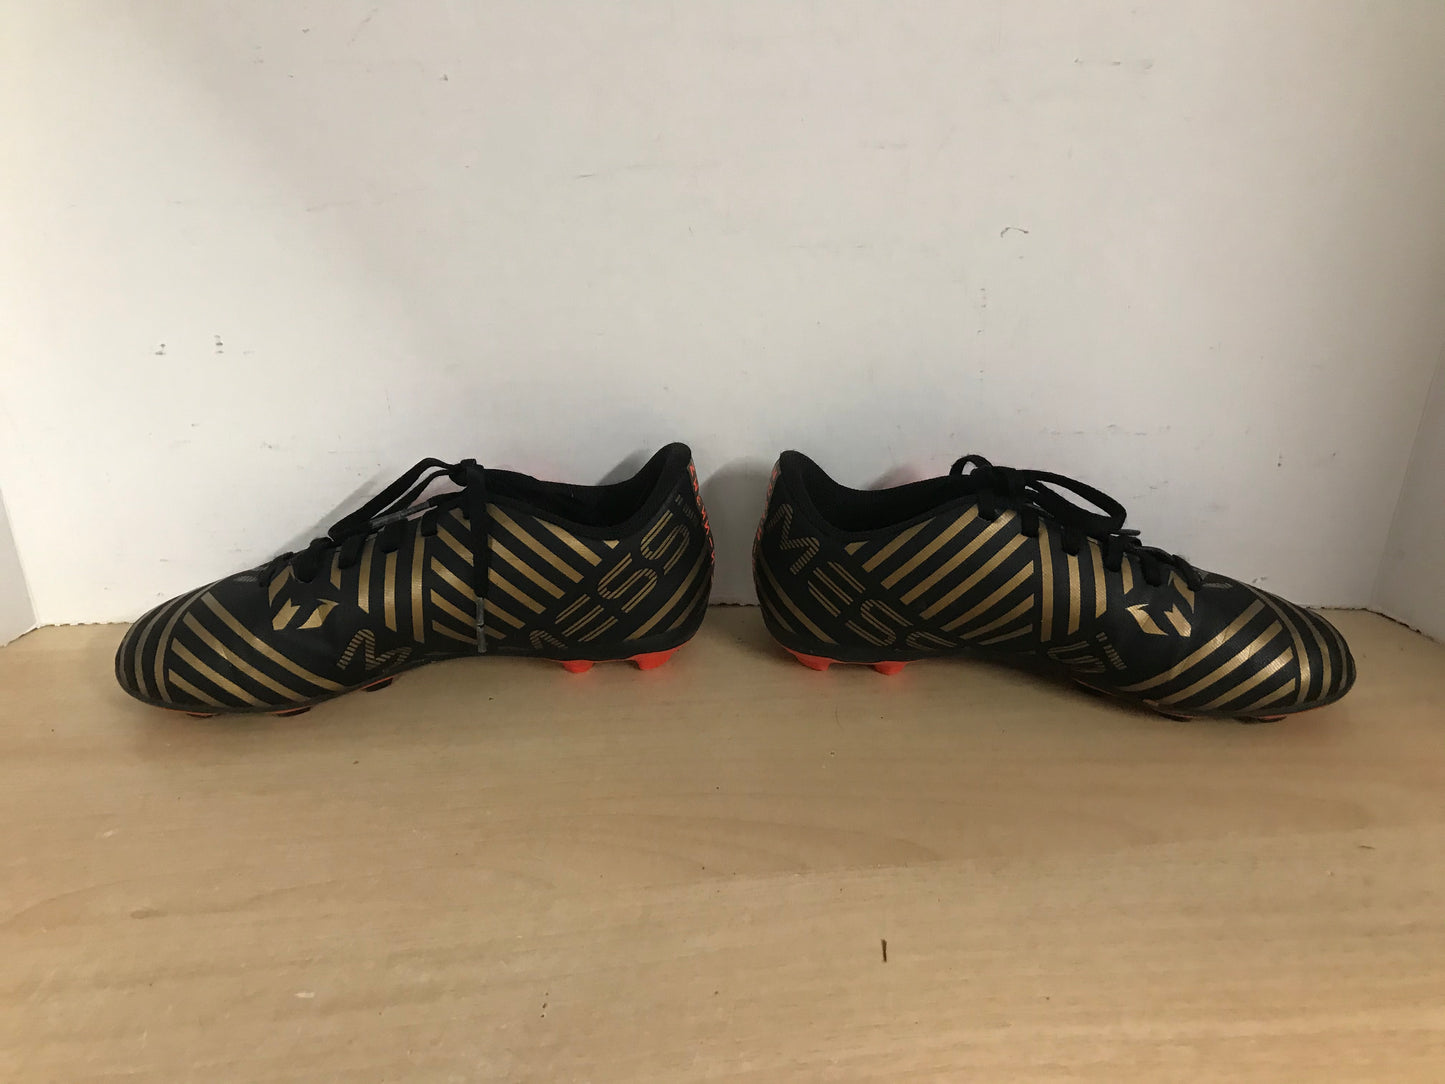 Soccer Shoes Cleats Child Size 4 Nike Messi Nemesis Black Coral Gold Excellent